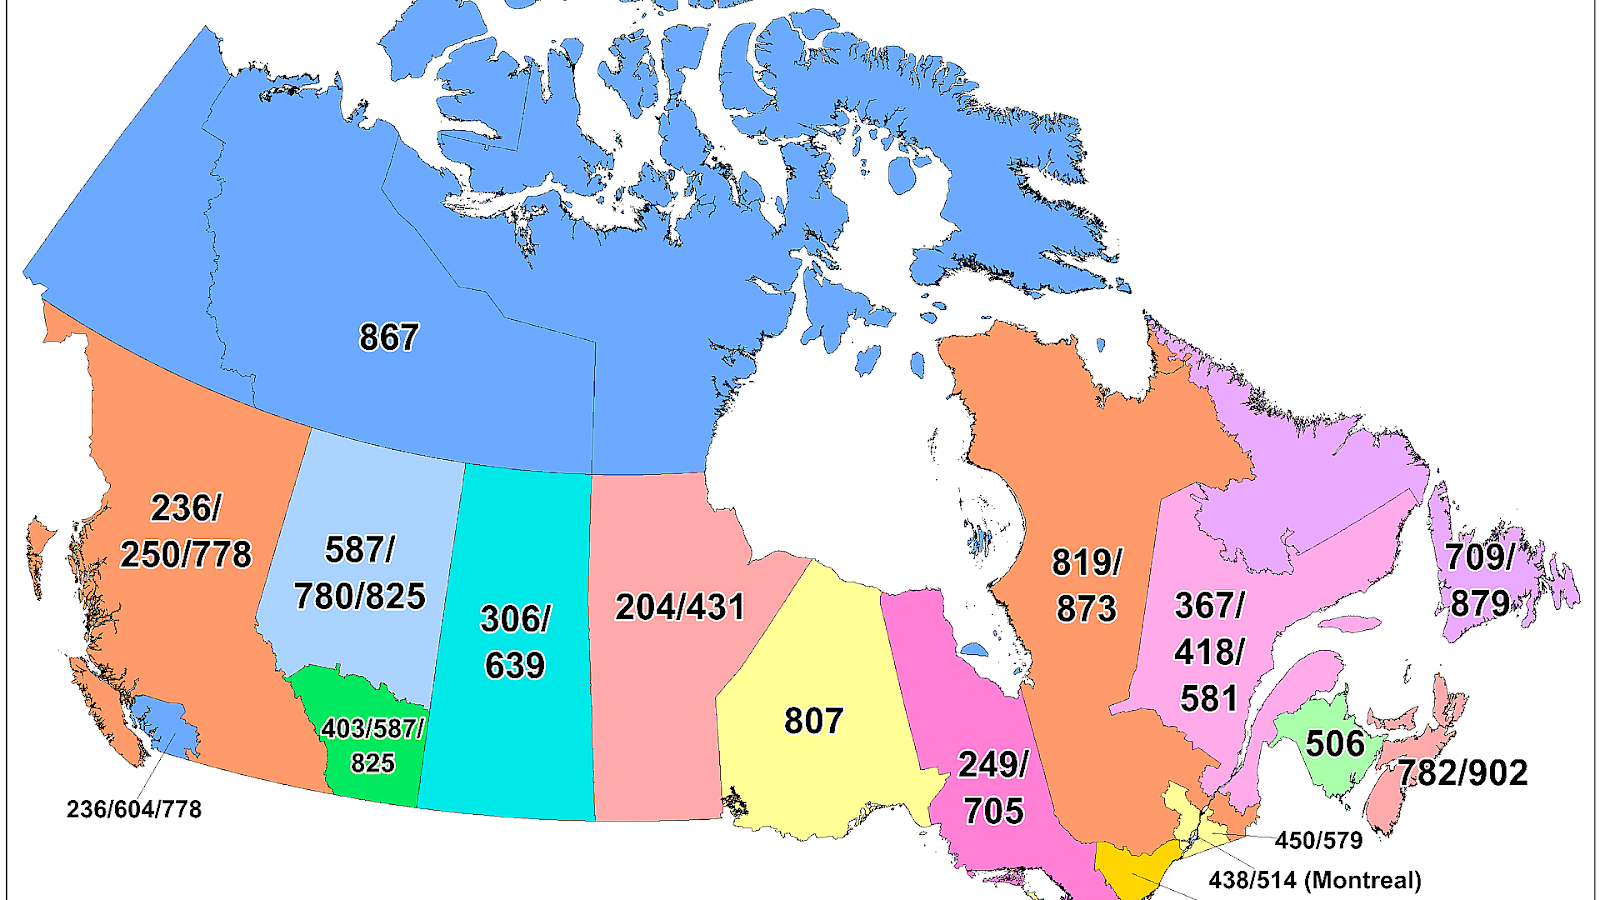 Area код. Индекс Канады. Area code. Канада ЗИП код. Canada area.